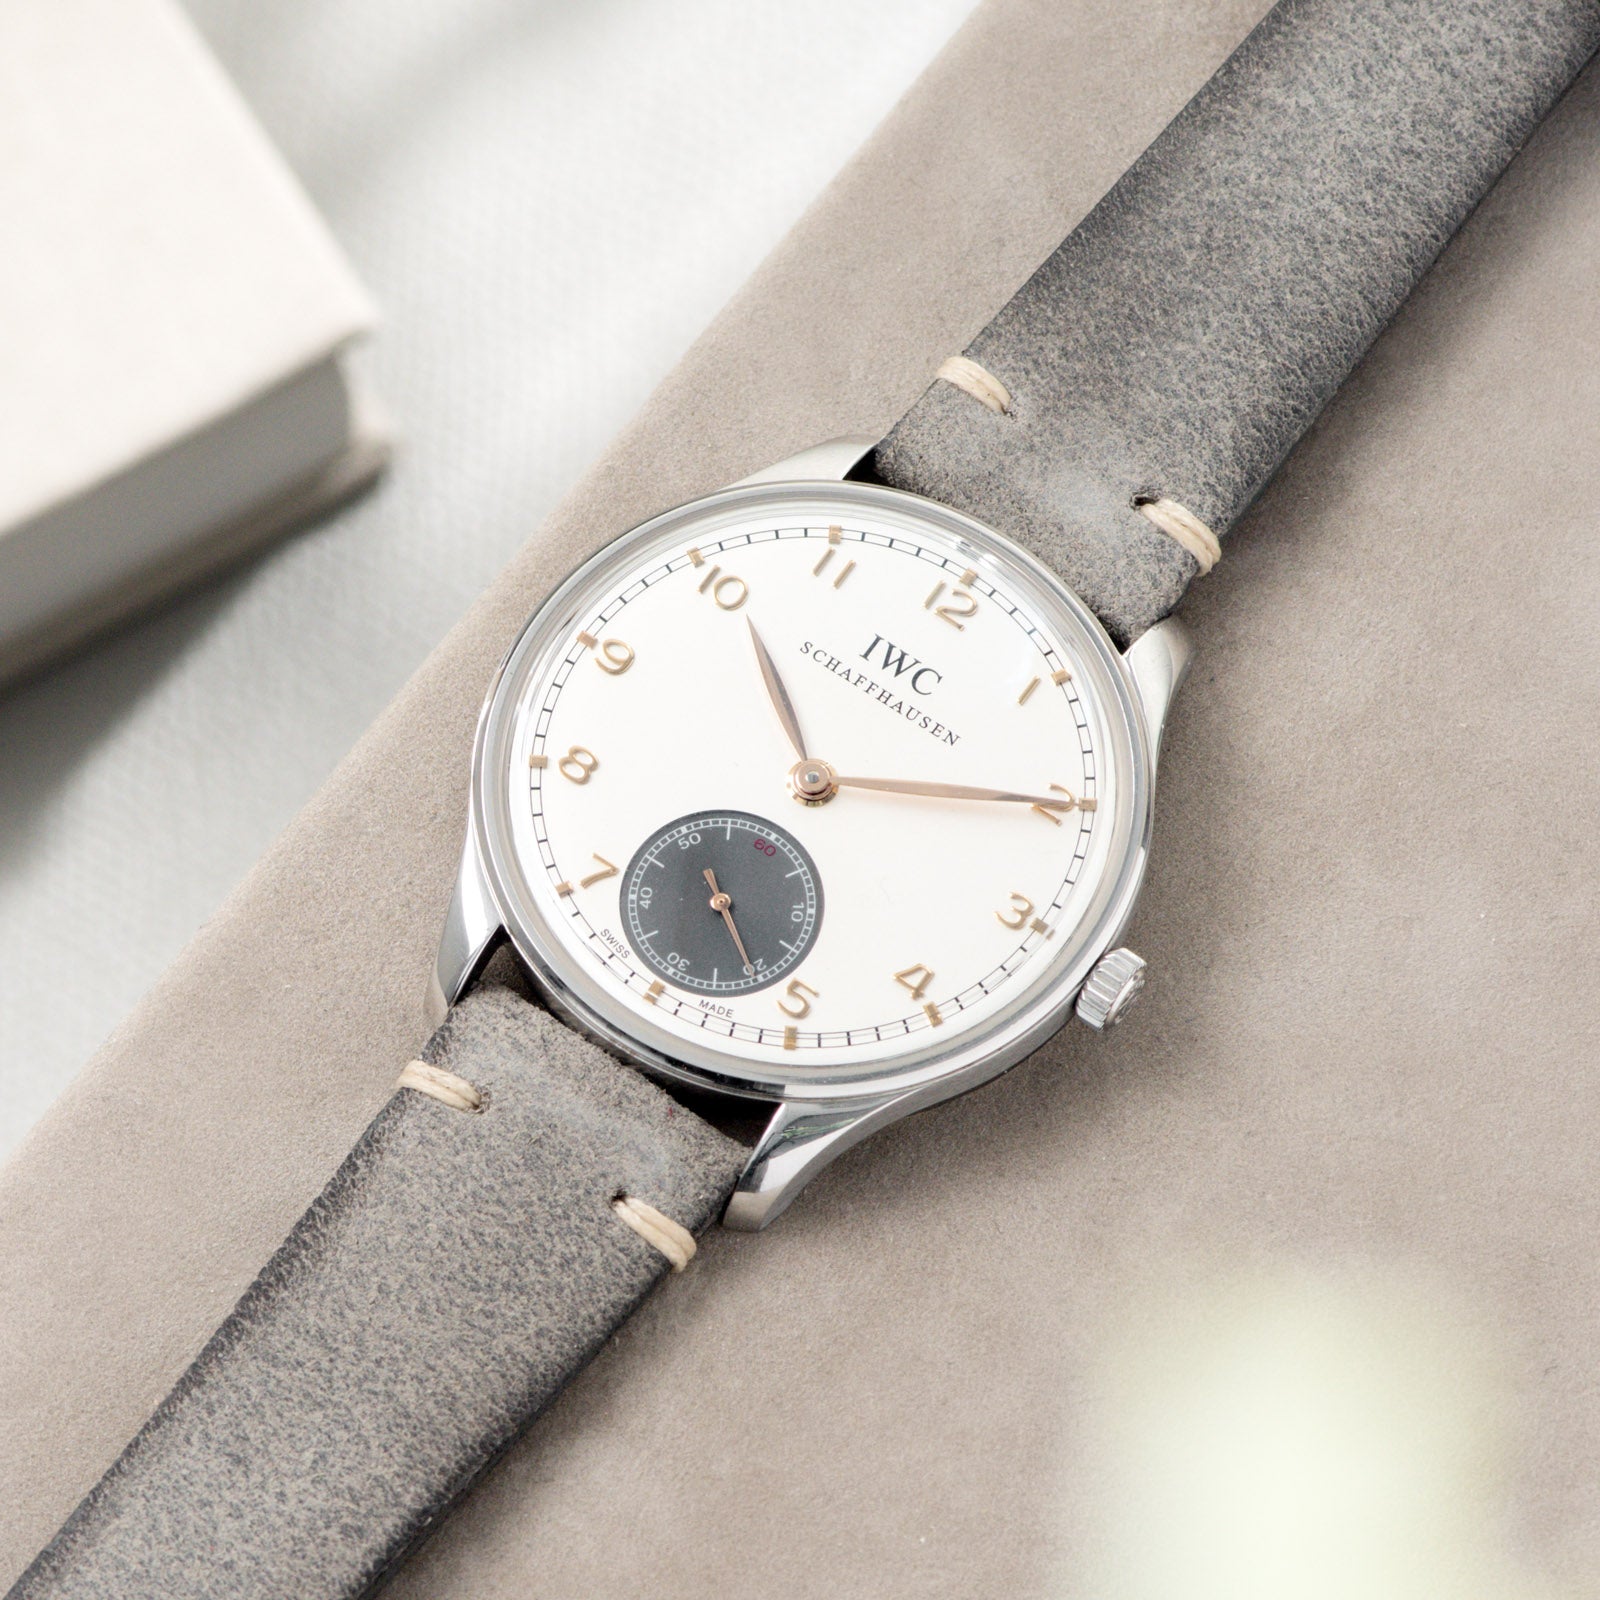 Rugged Grey Leren Horlogeband